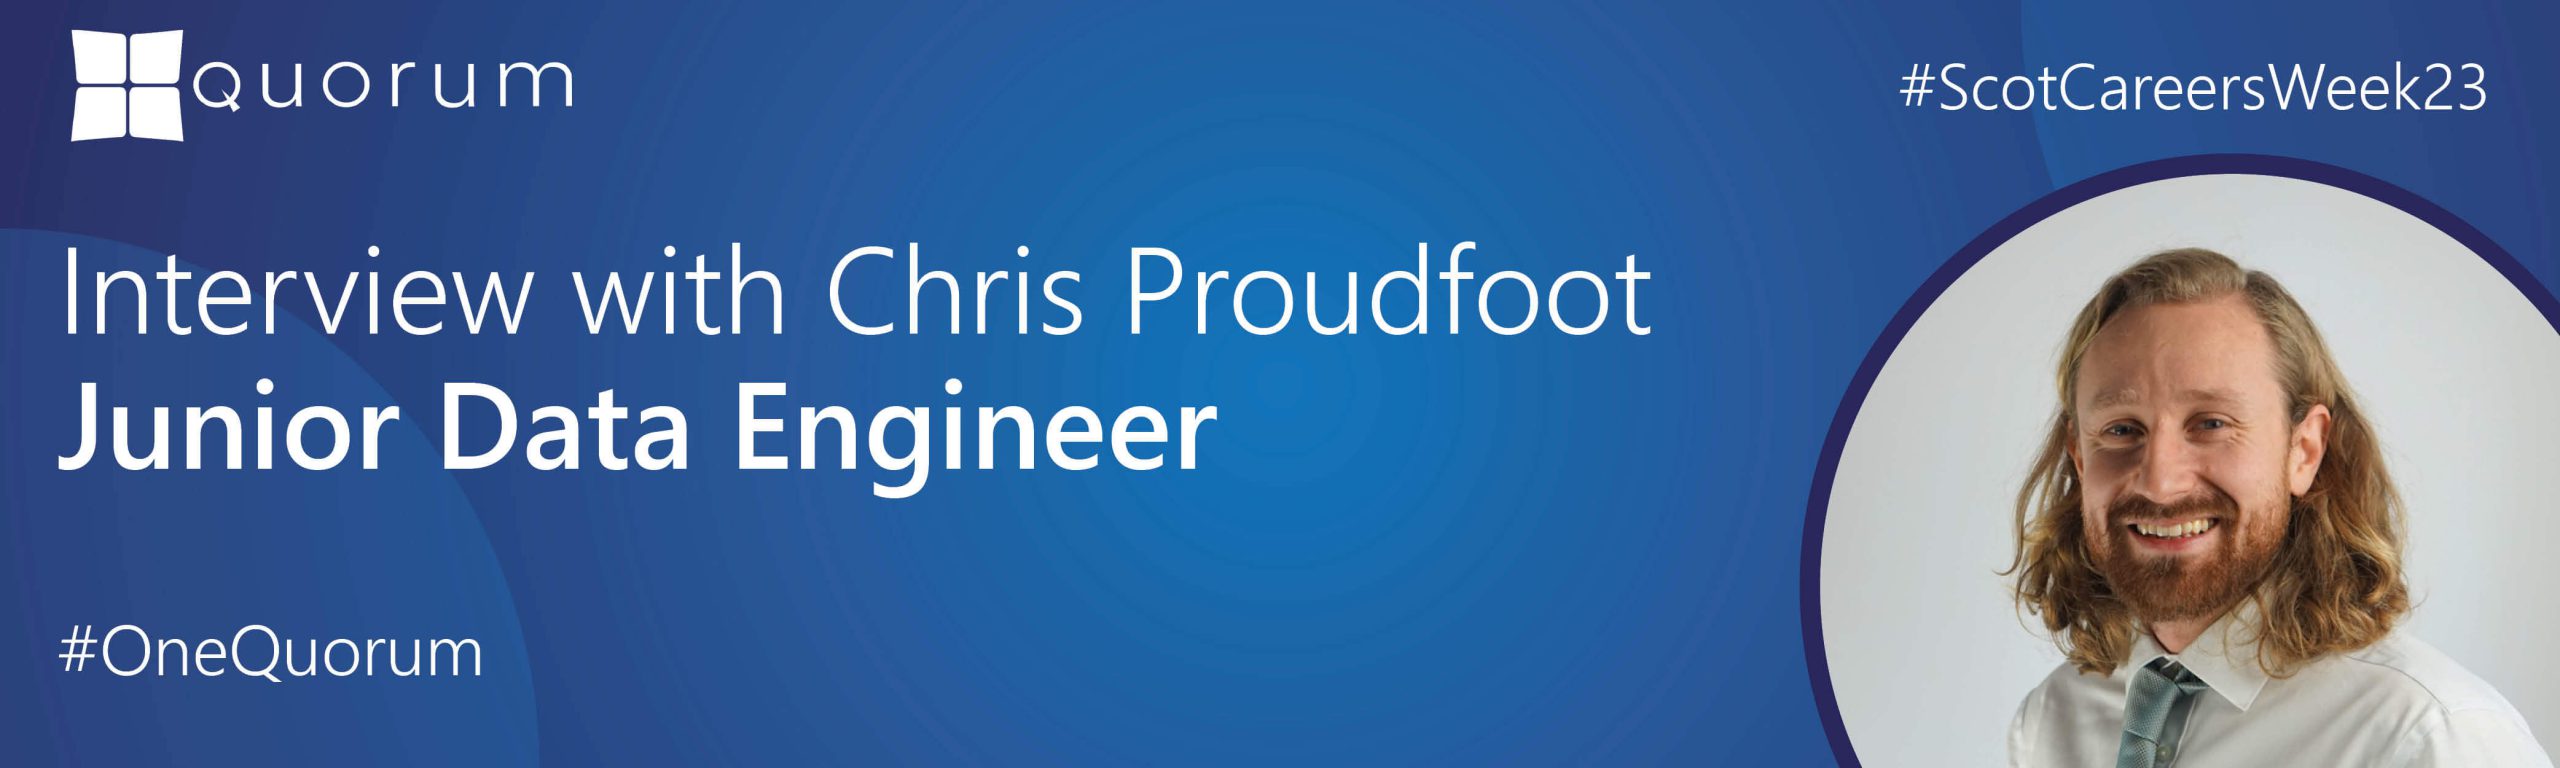 Website Banner Scottish Career Week - Chris Proudfoot